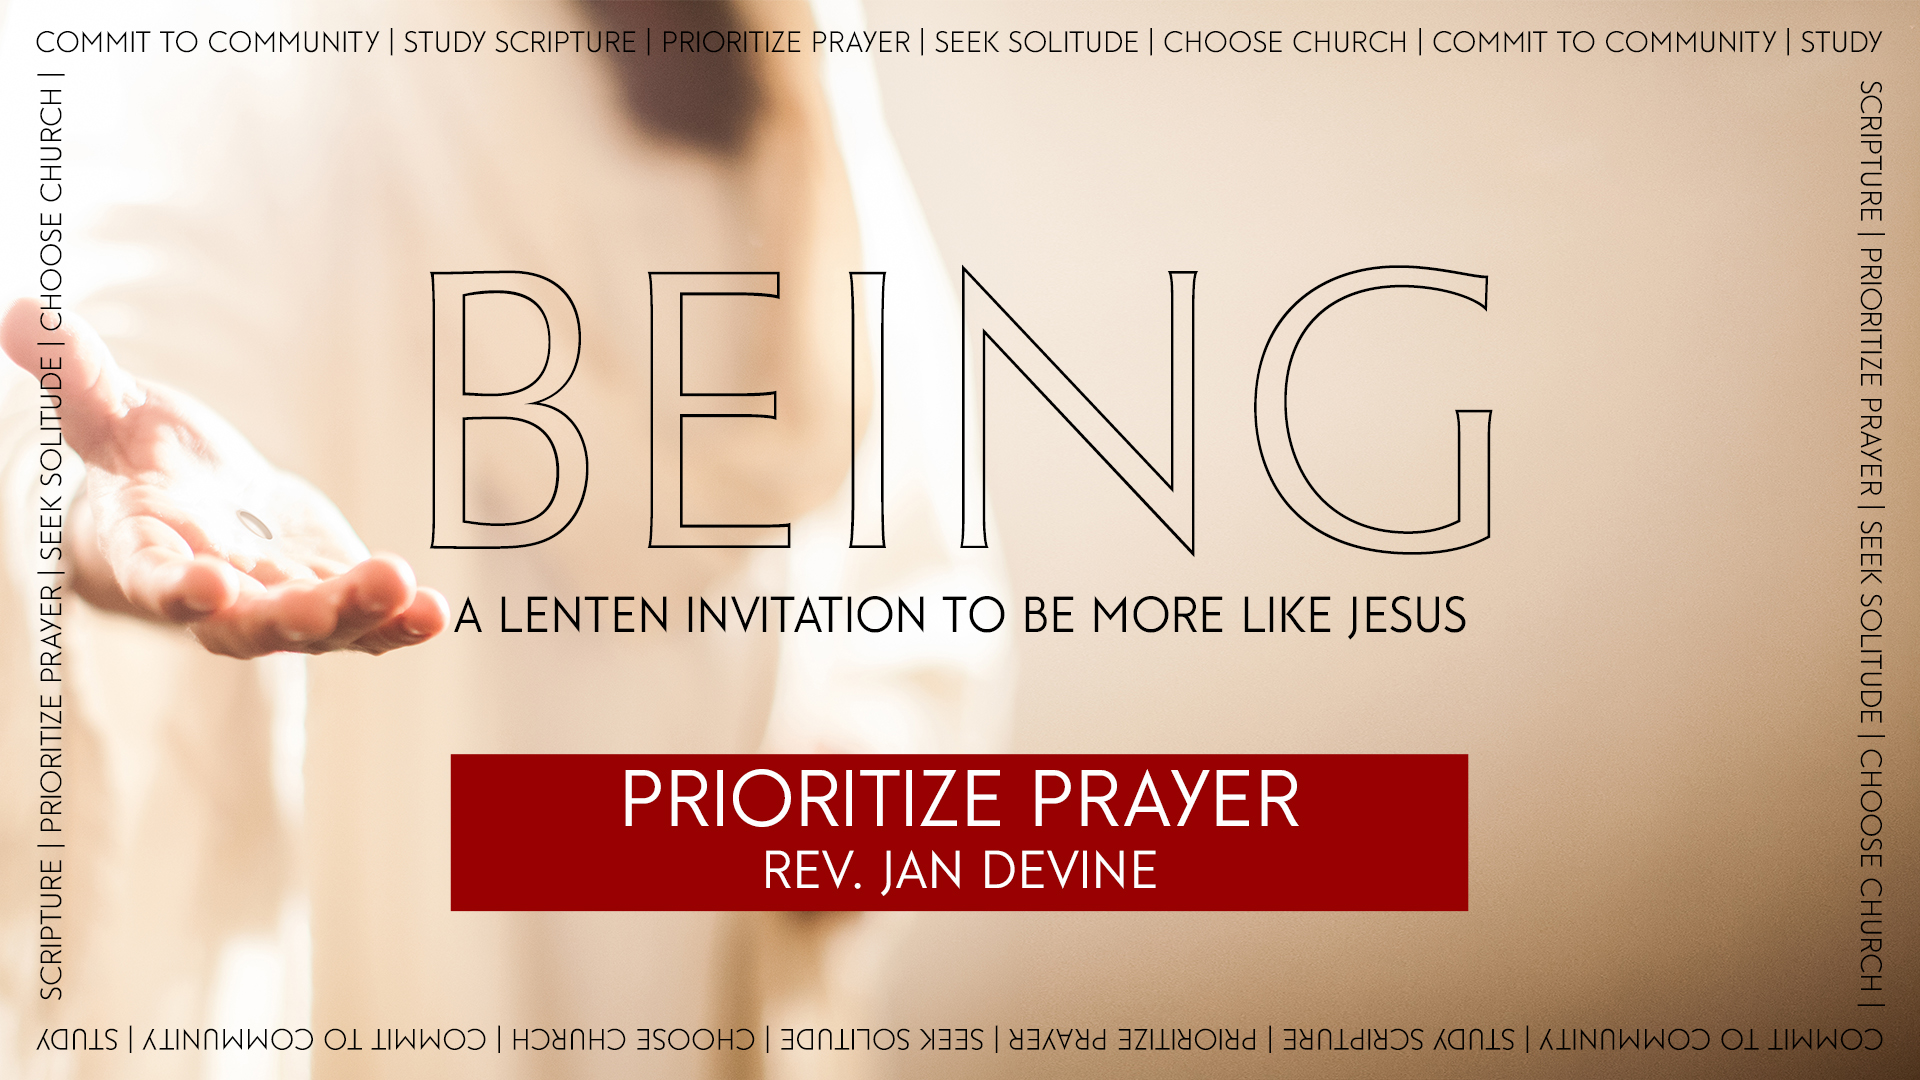 Prioritize Prayer Image